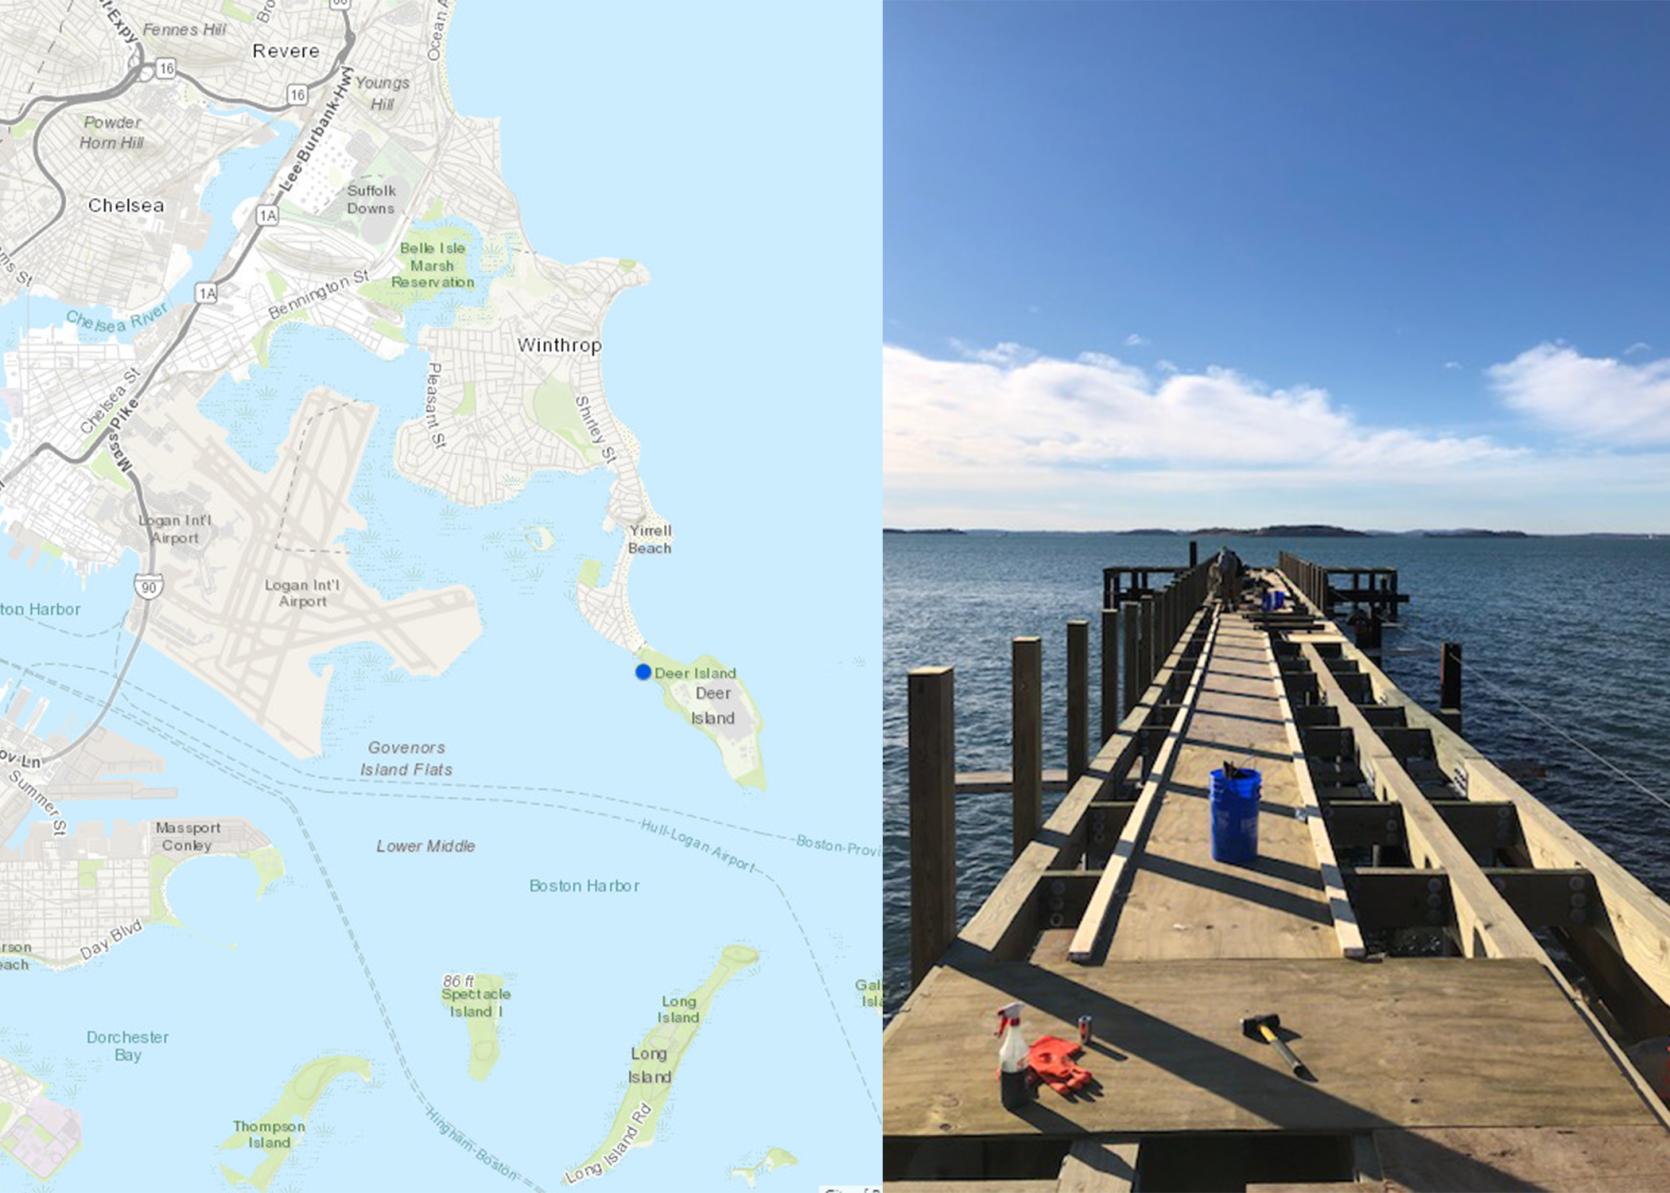 (L) Map of Deer Island Pier location; (R) Recent pier construction